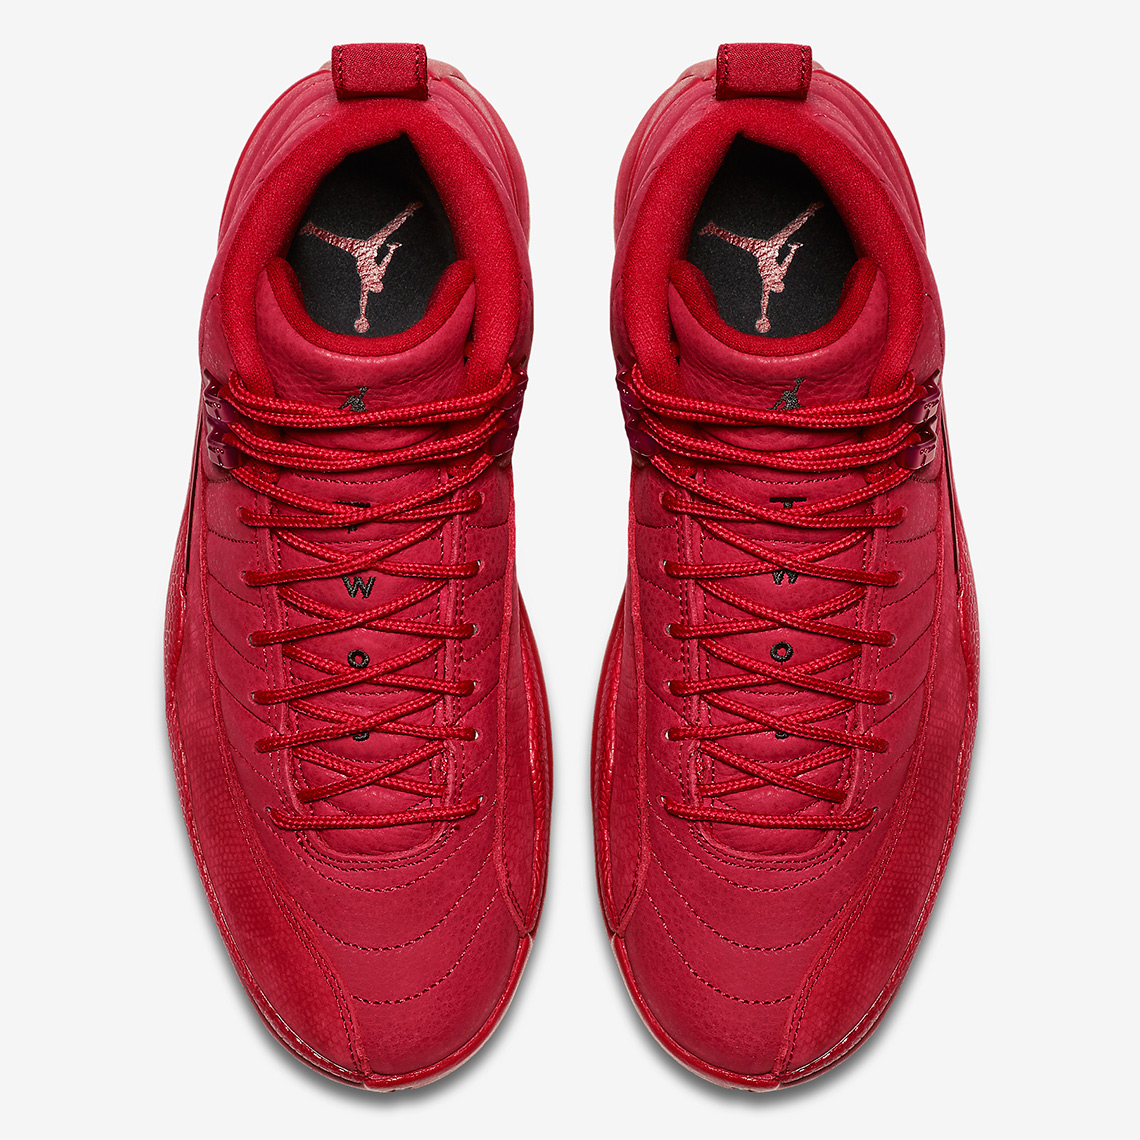 Jordan 12 Gym Red 130690-601 Where To Buy | SneakerNews.com